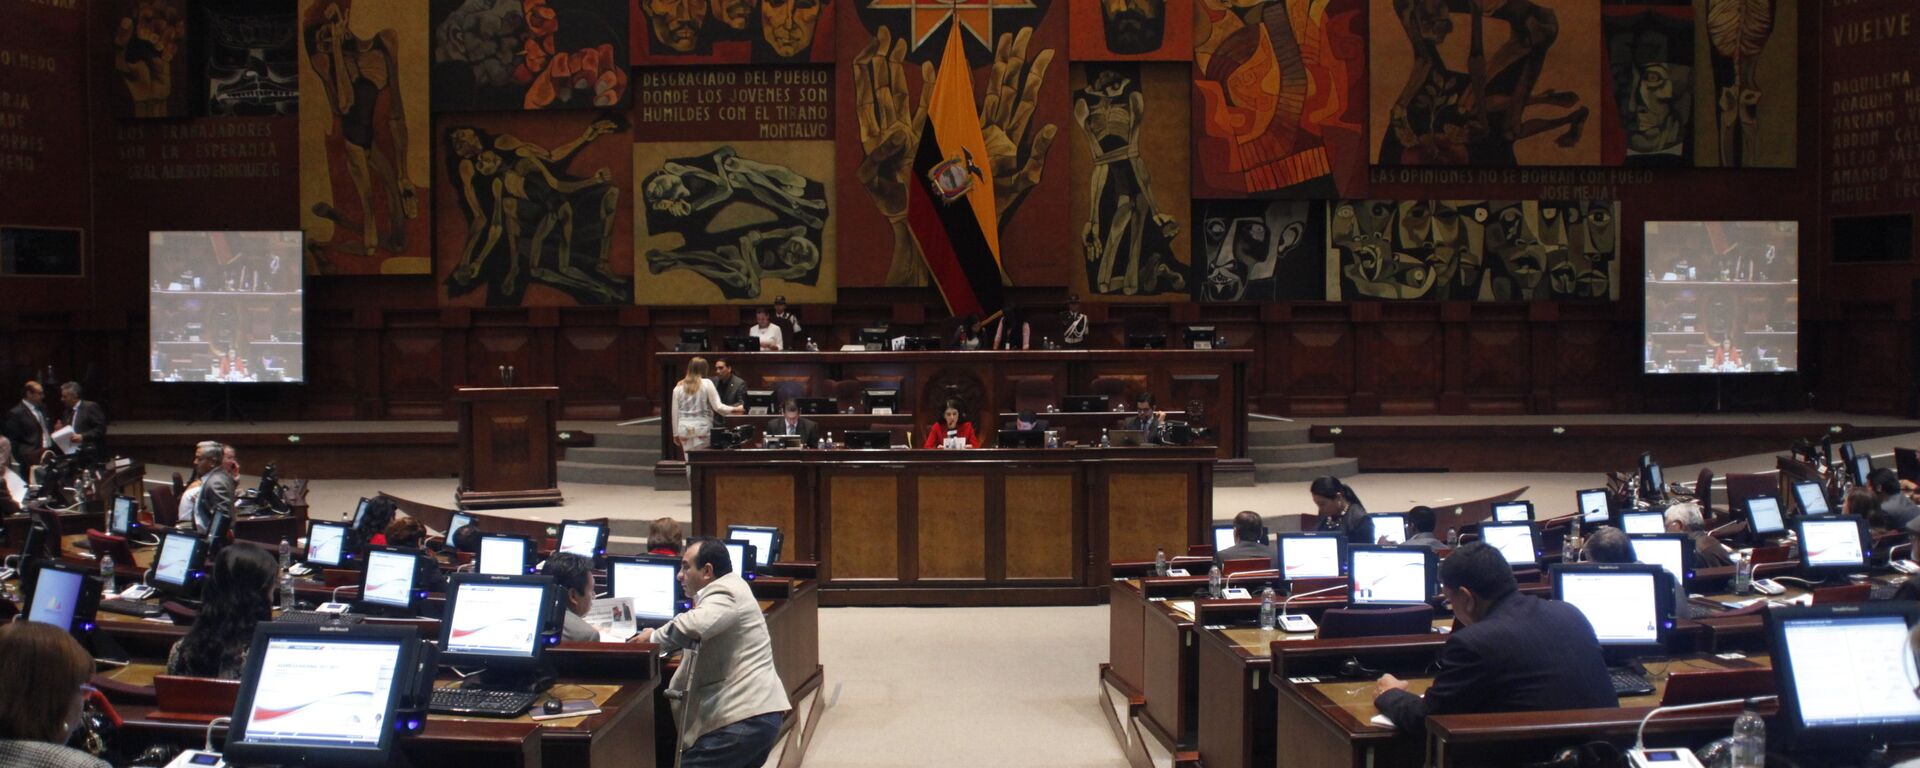 La Asamblea Nacional de Ecuador (archivo) - Sputnik Mundo, 1920, 25.08.2021